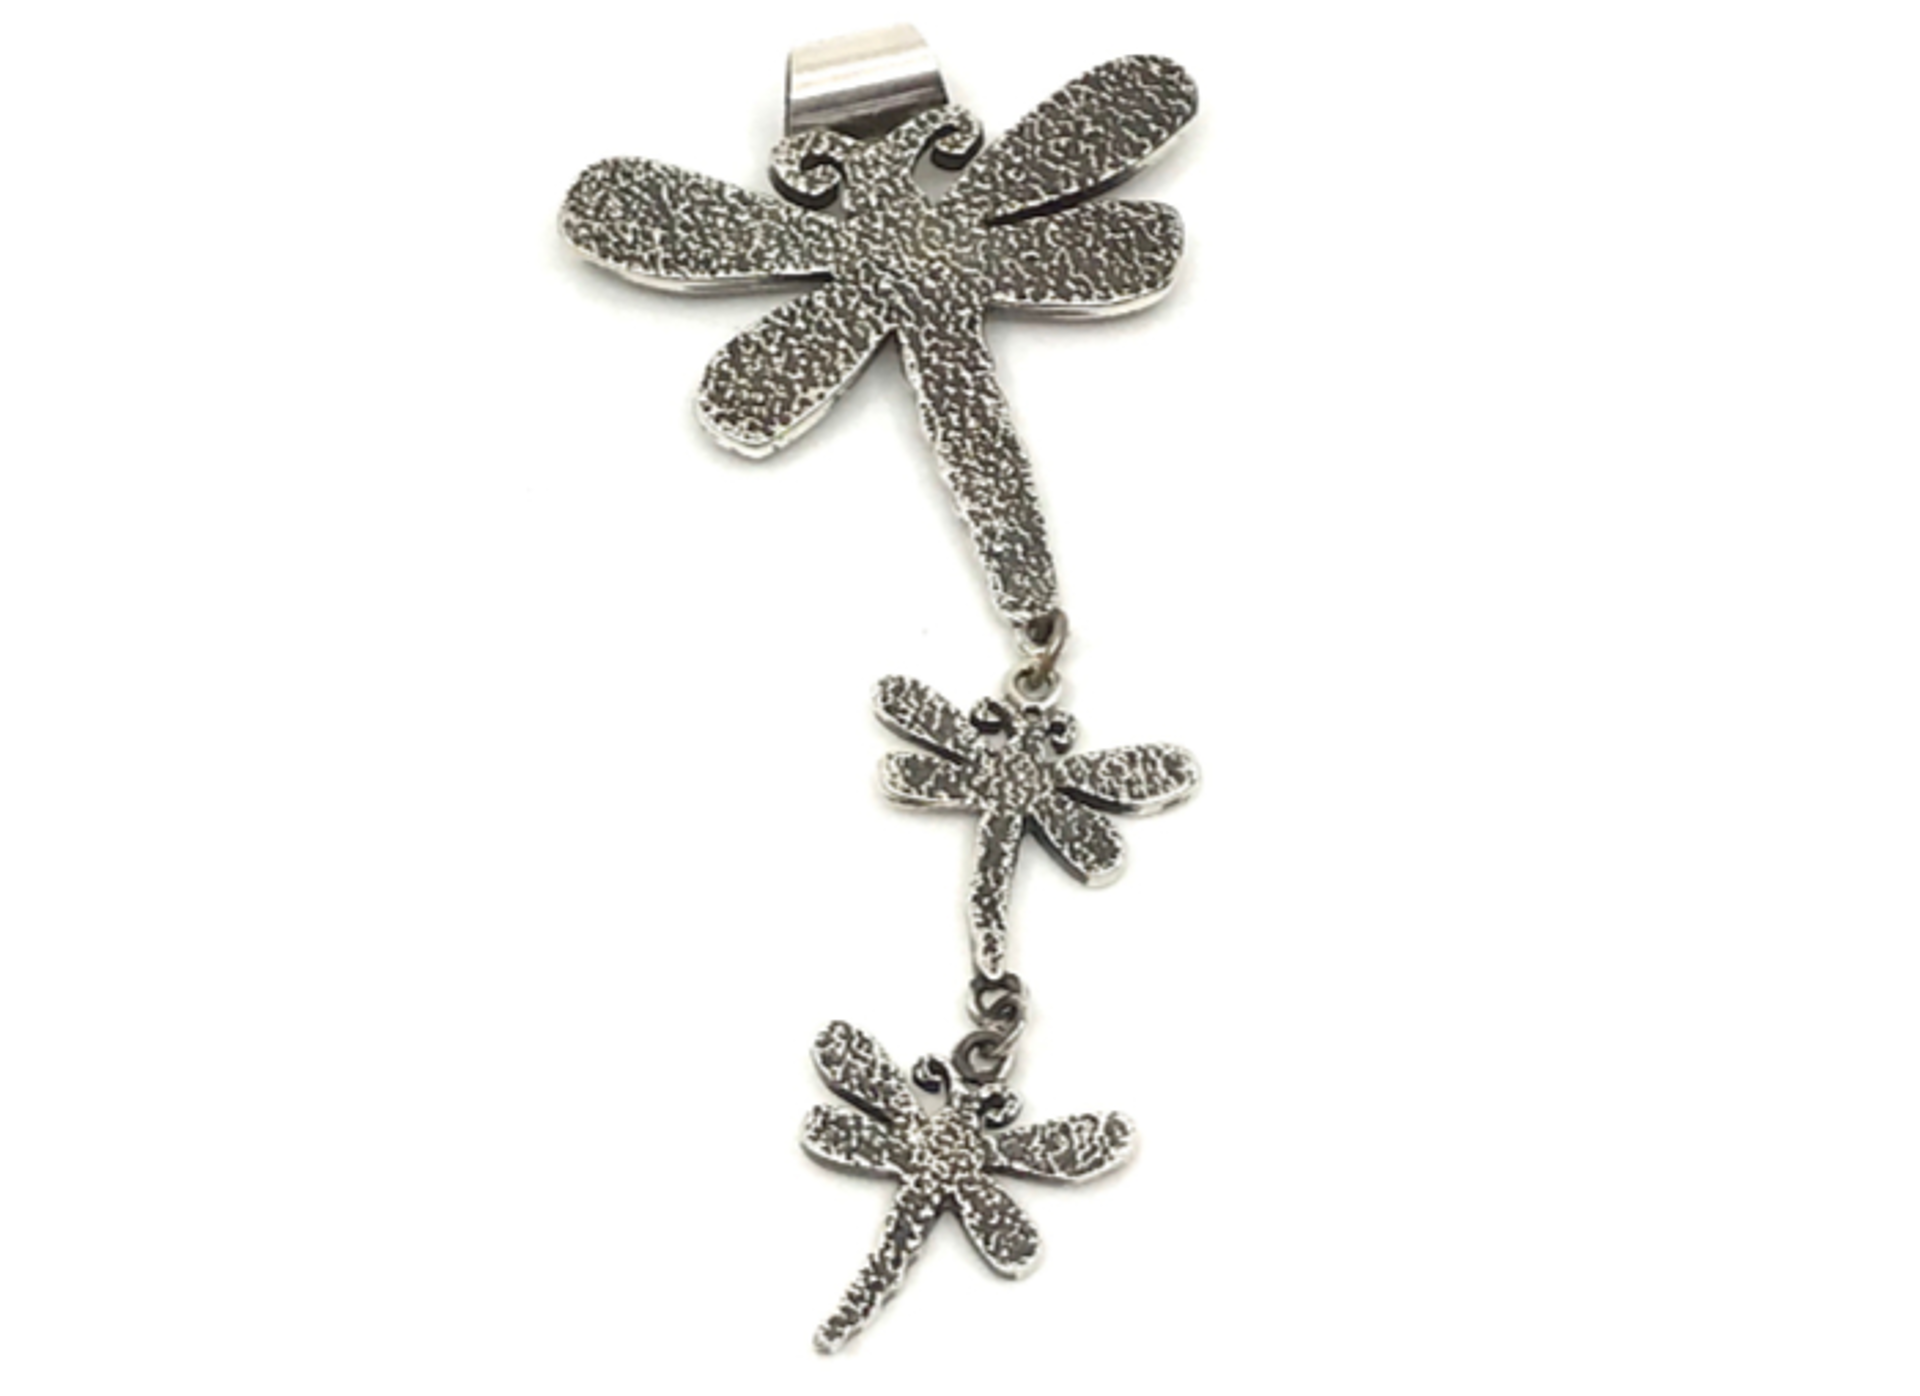 Trust, Believe & Dream(Yazzie Girls) 3 dragonfly pendant by Melanie A. Yazzie